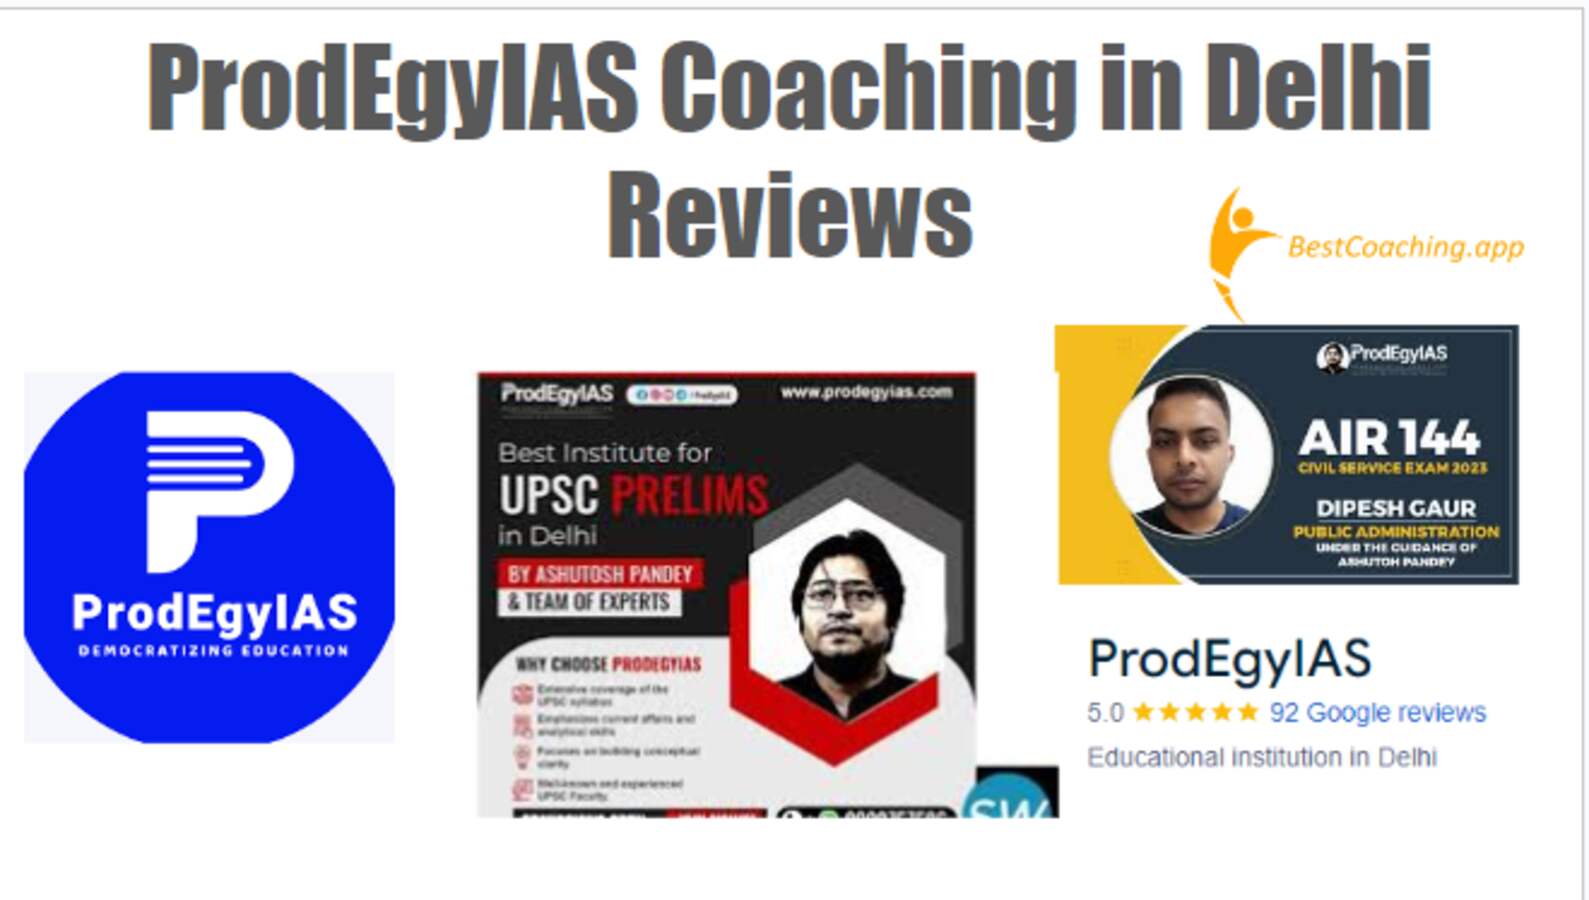 ProdEgyIAS Coaching in Delhi Reviews